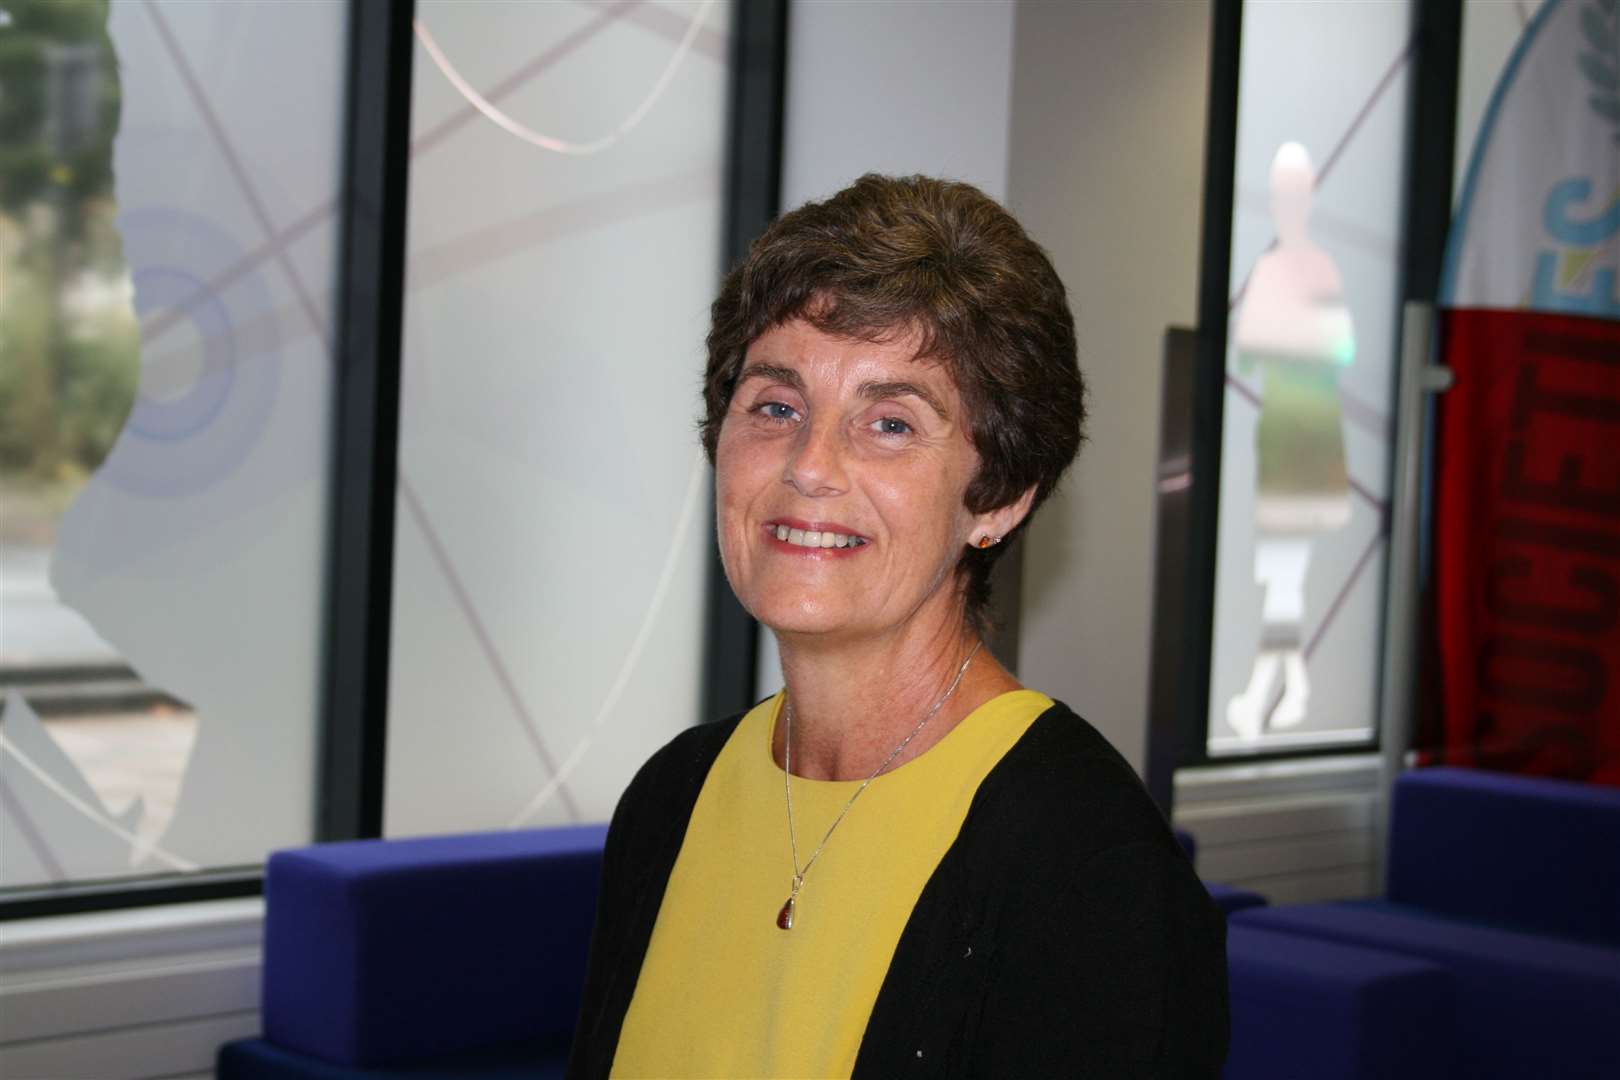 Professor Helen James, deputy vice-chancellor at Canterbury Christ Church University